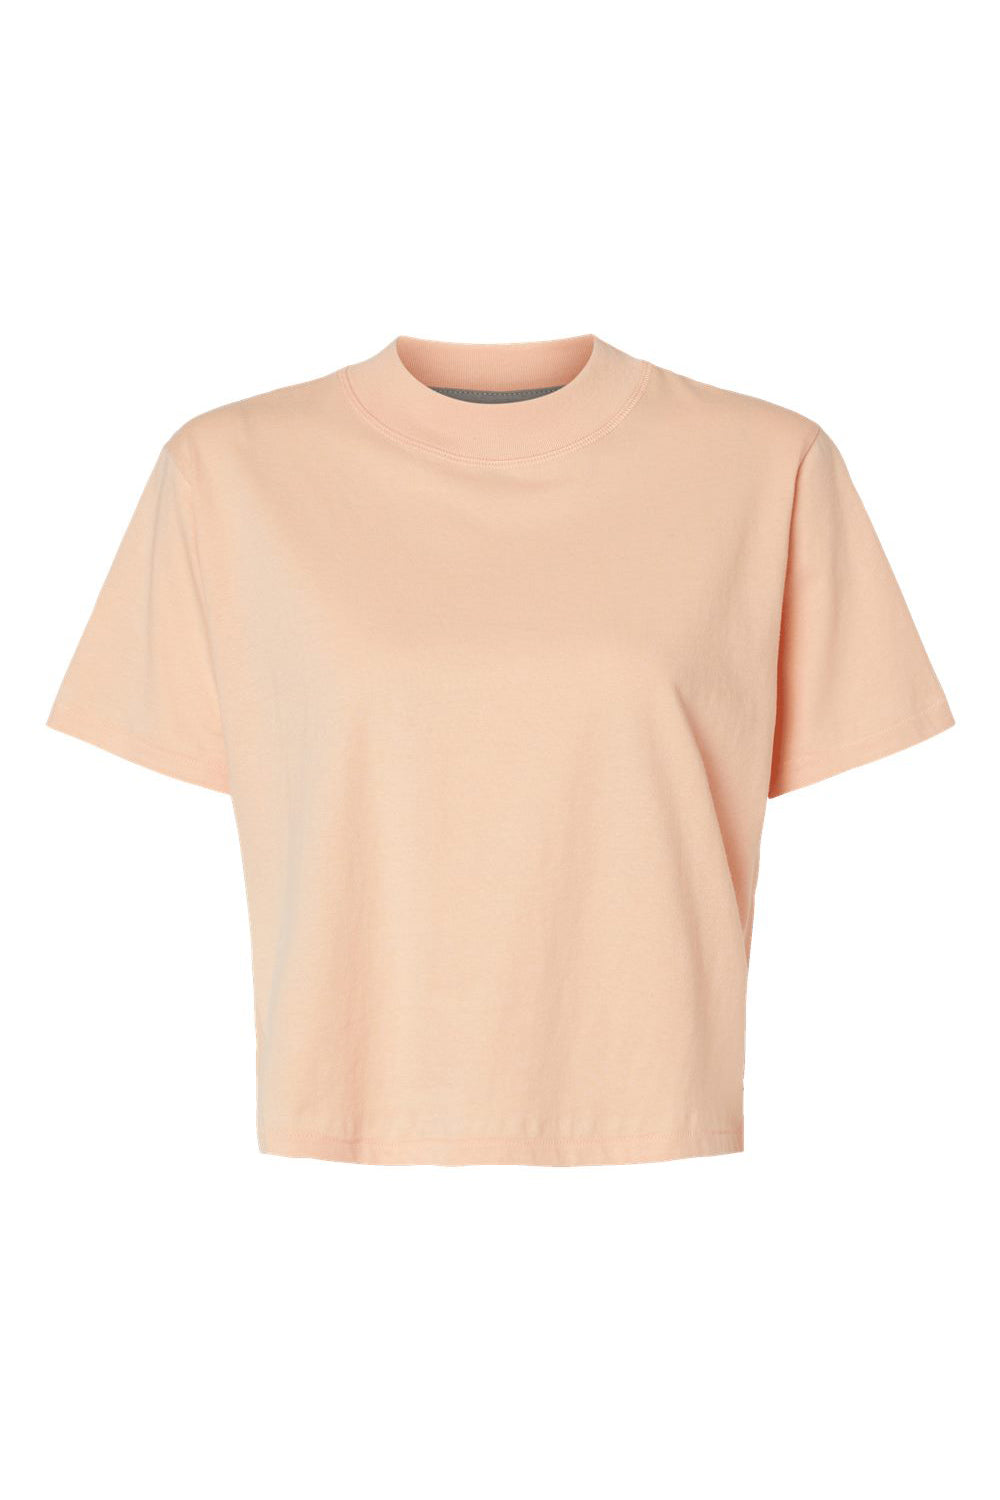 LAT 3518 Womens Boxy Short Sleeve Crewneck T-Shirt Peachy Flat Front